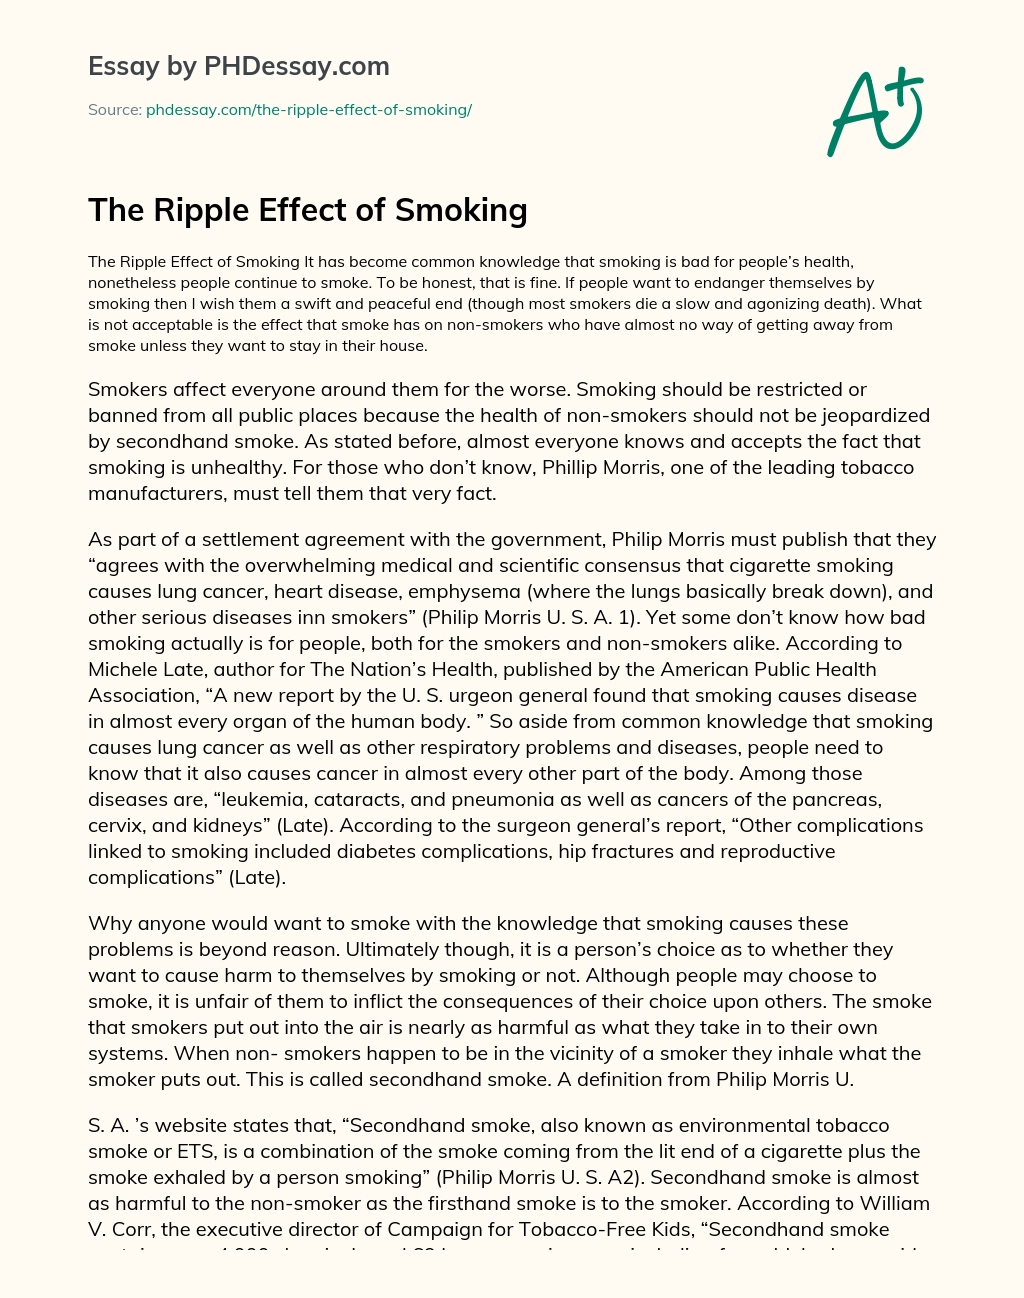 The Ripple Effect of Smoking essay